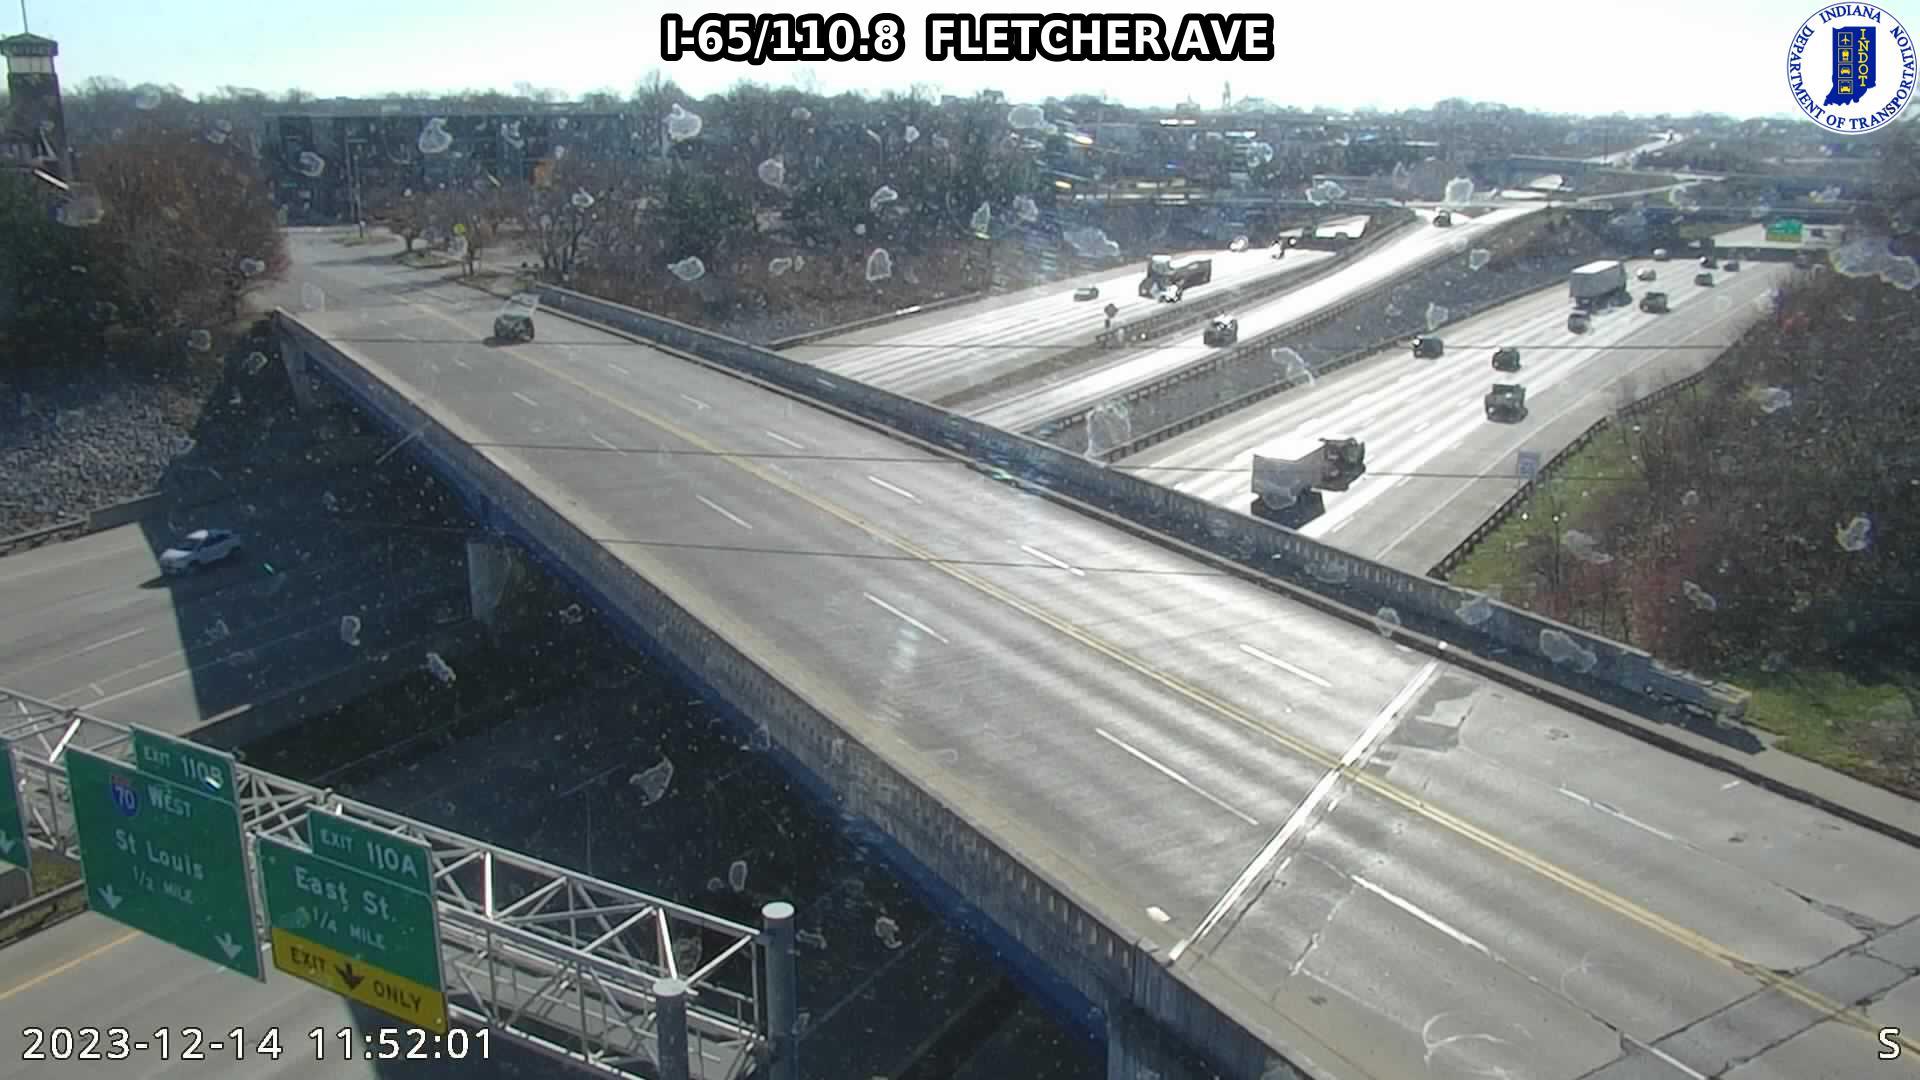 Fletcher Place: I-65: I-65/110.8 FLETCHER AVE Traffic Camera